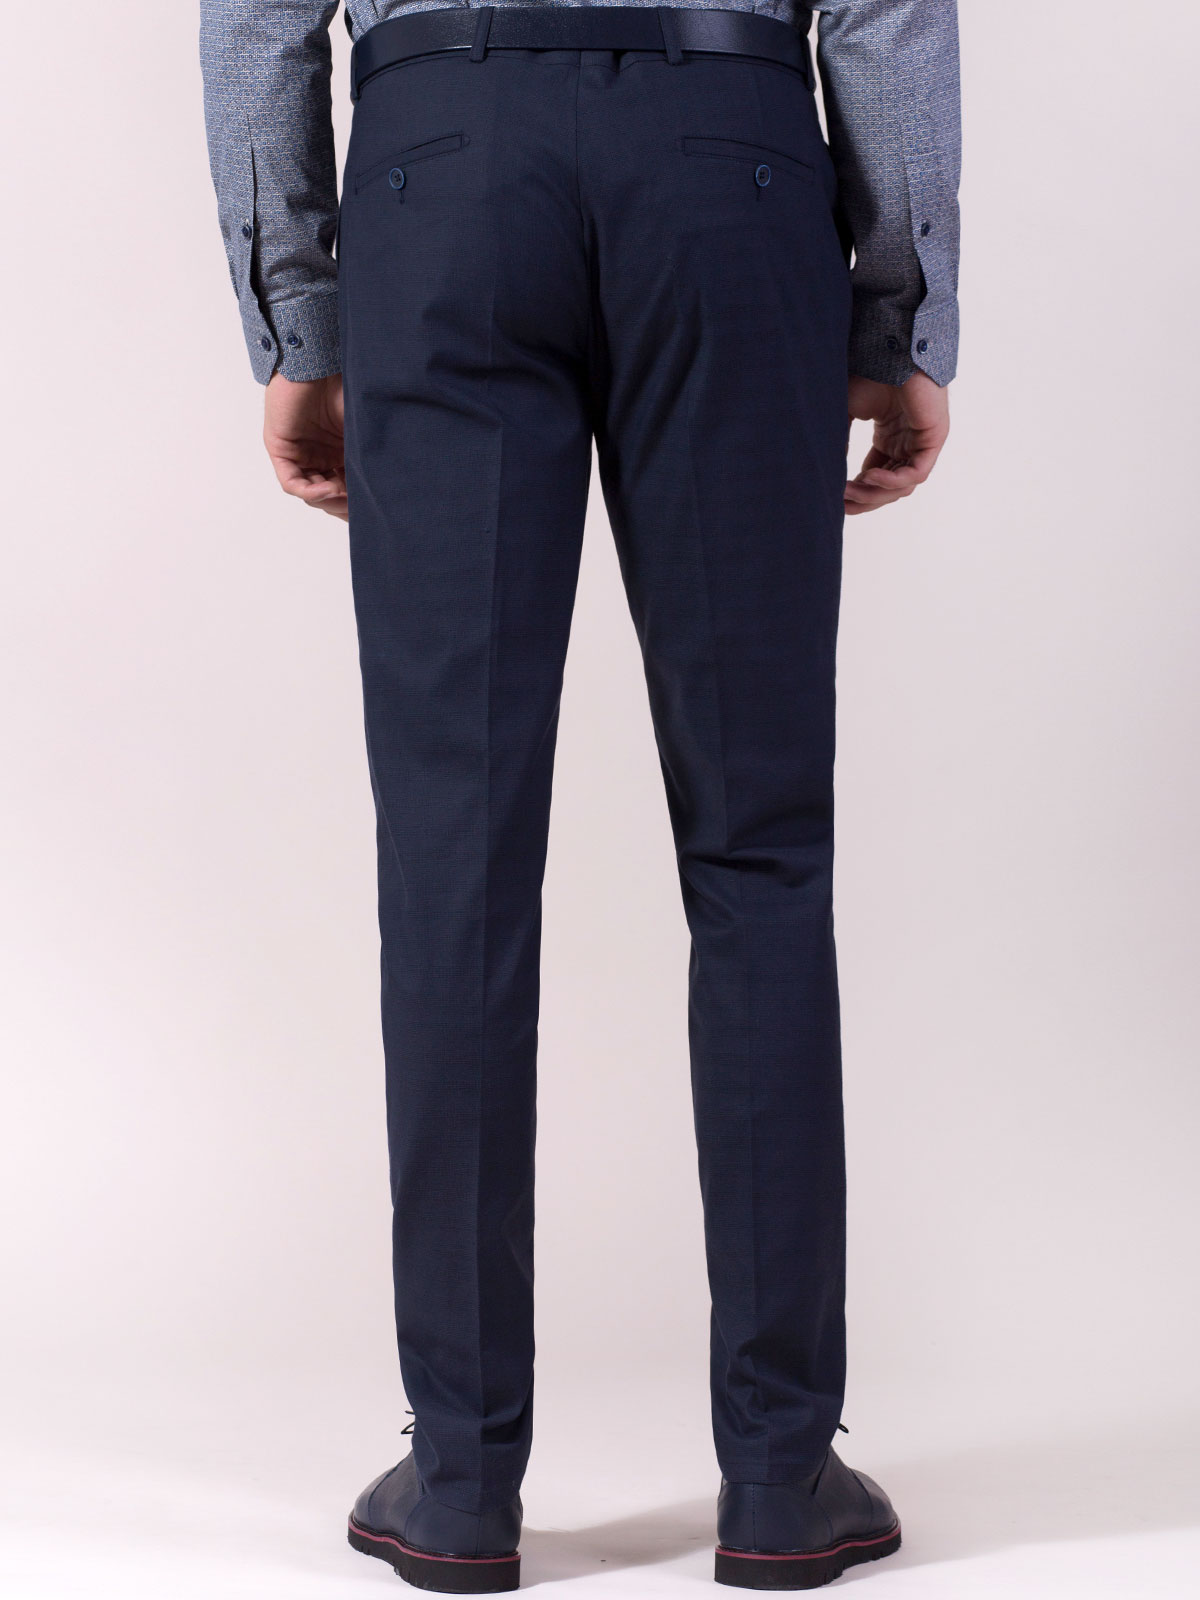 MANCREW Formal Pants for men - Formal Trousers Combo - Blue, Navy Blue